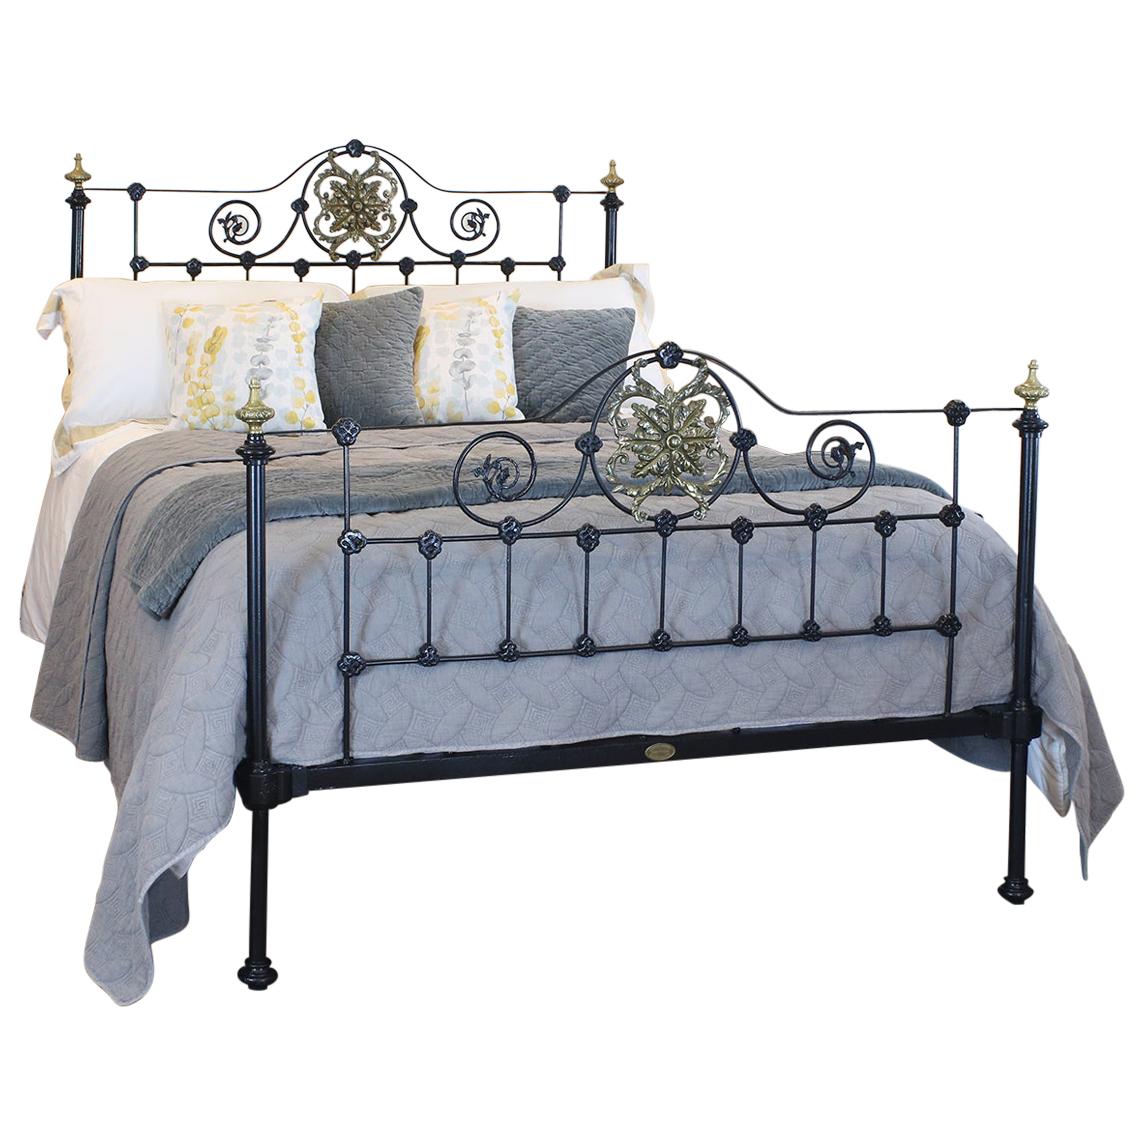 Decorative Antique Bed MK186